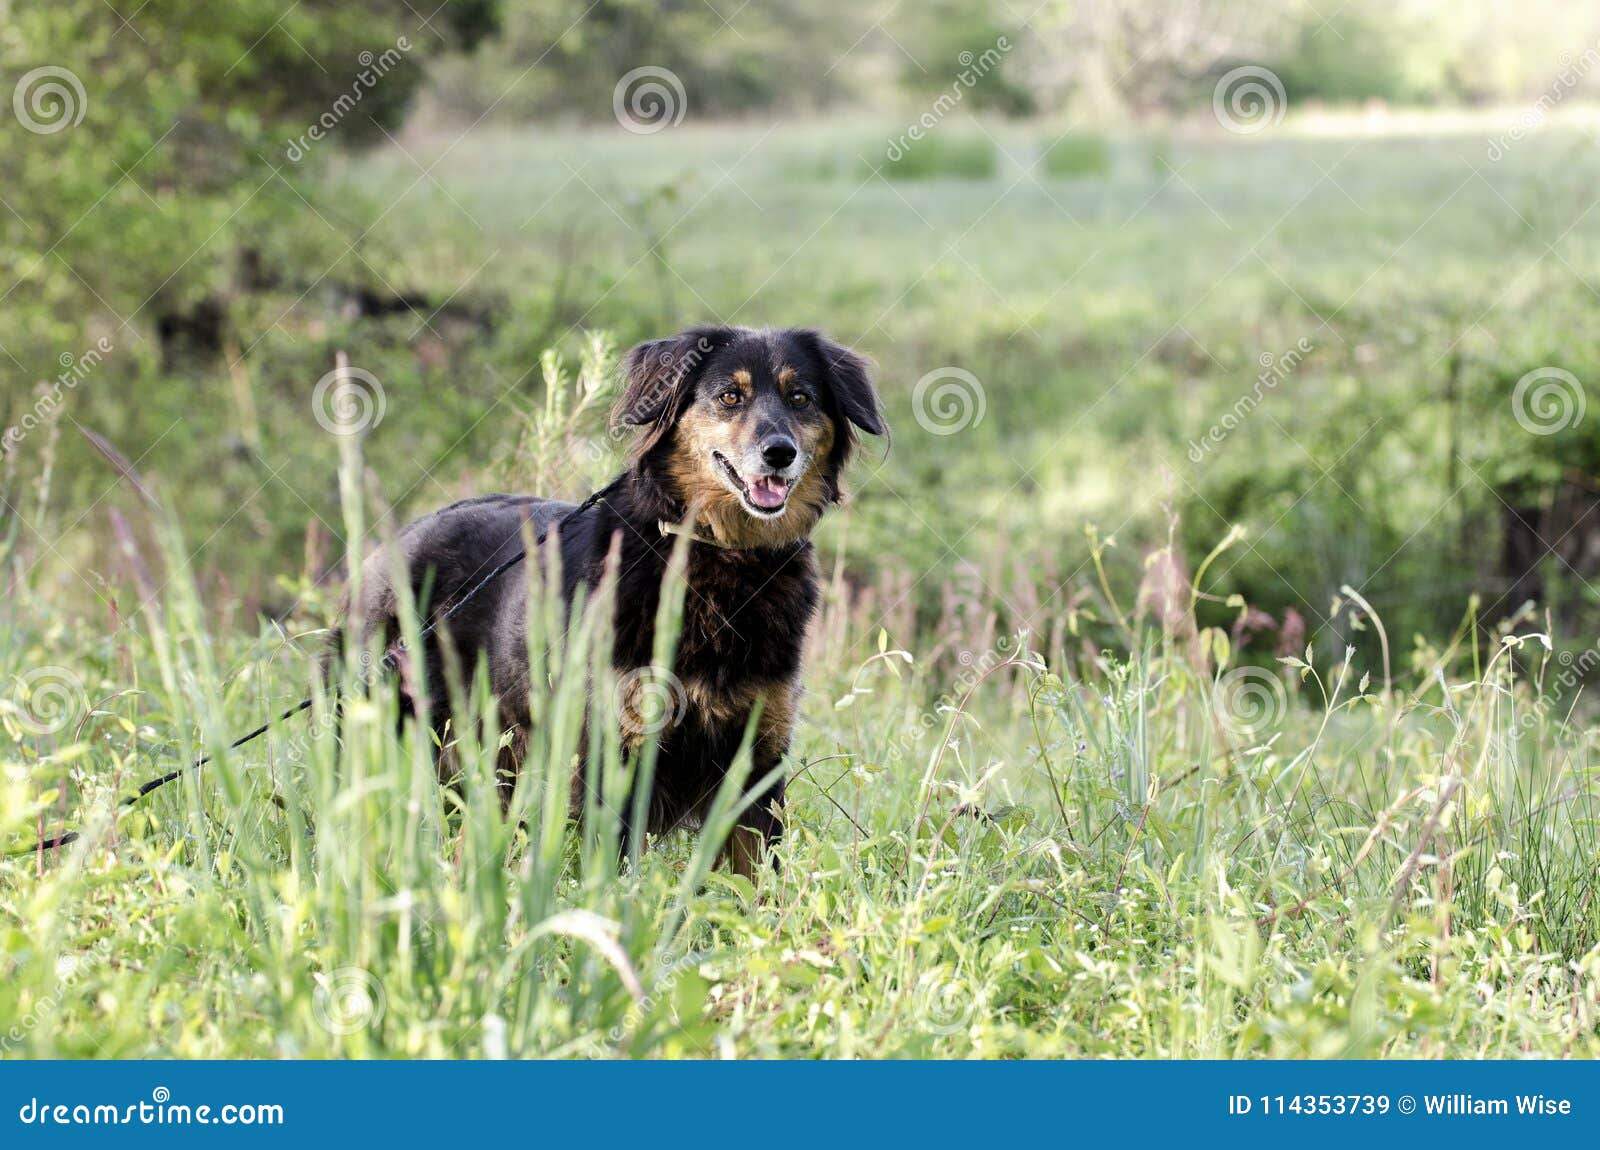 Aussie Setter Mix Dog Pet Rescue Adoption Photography Stock Image Image Of Humane Gray 114353739